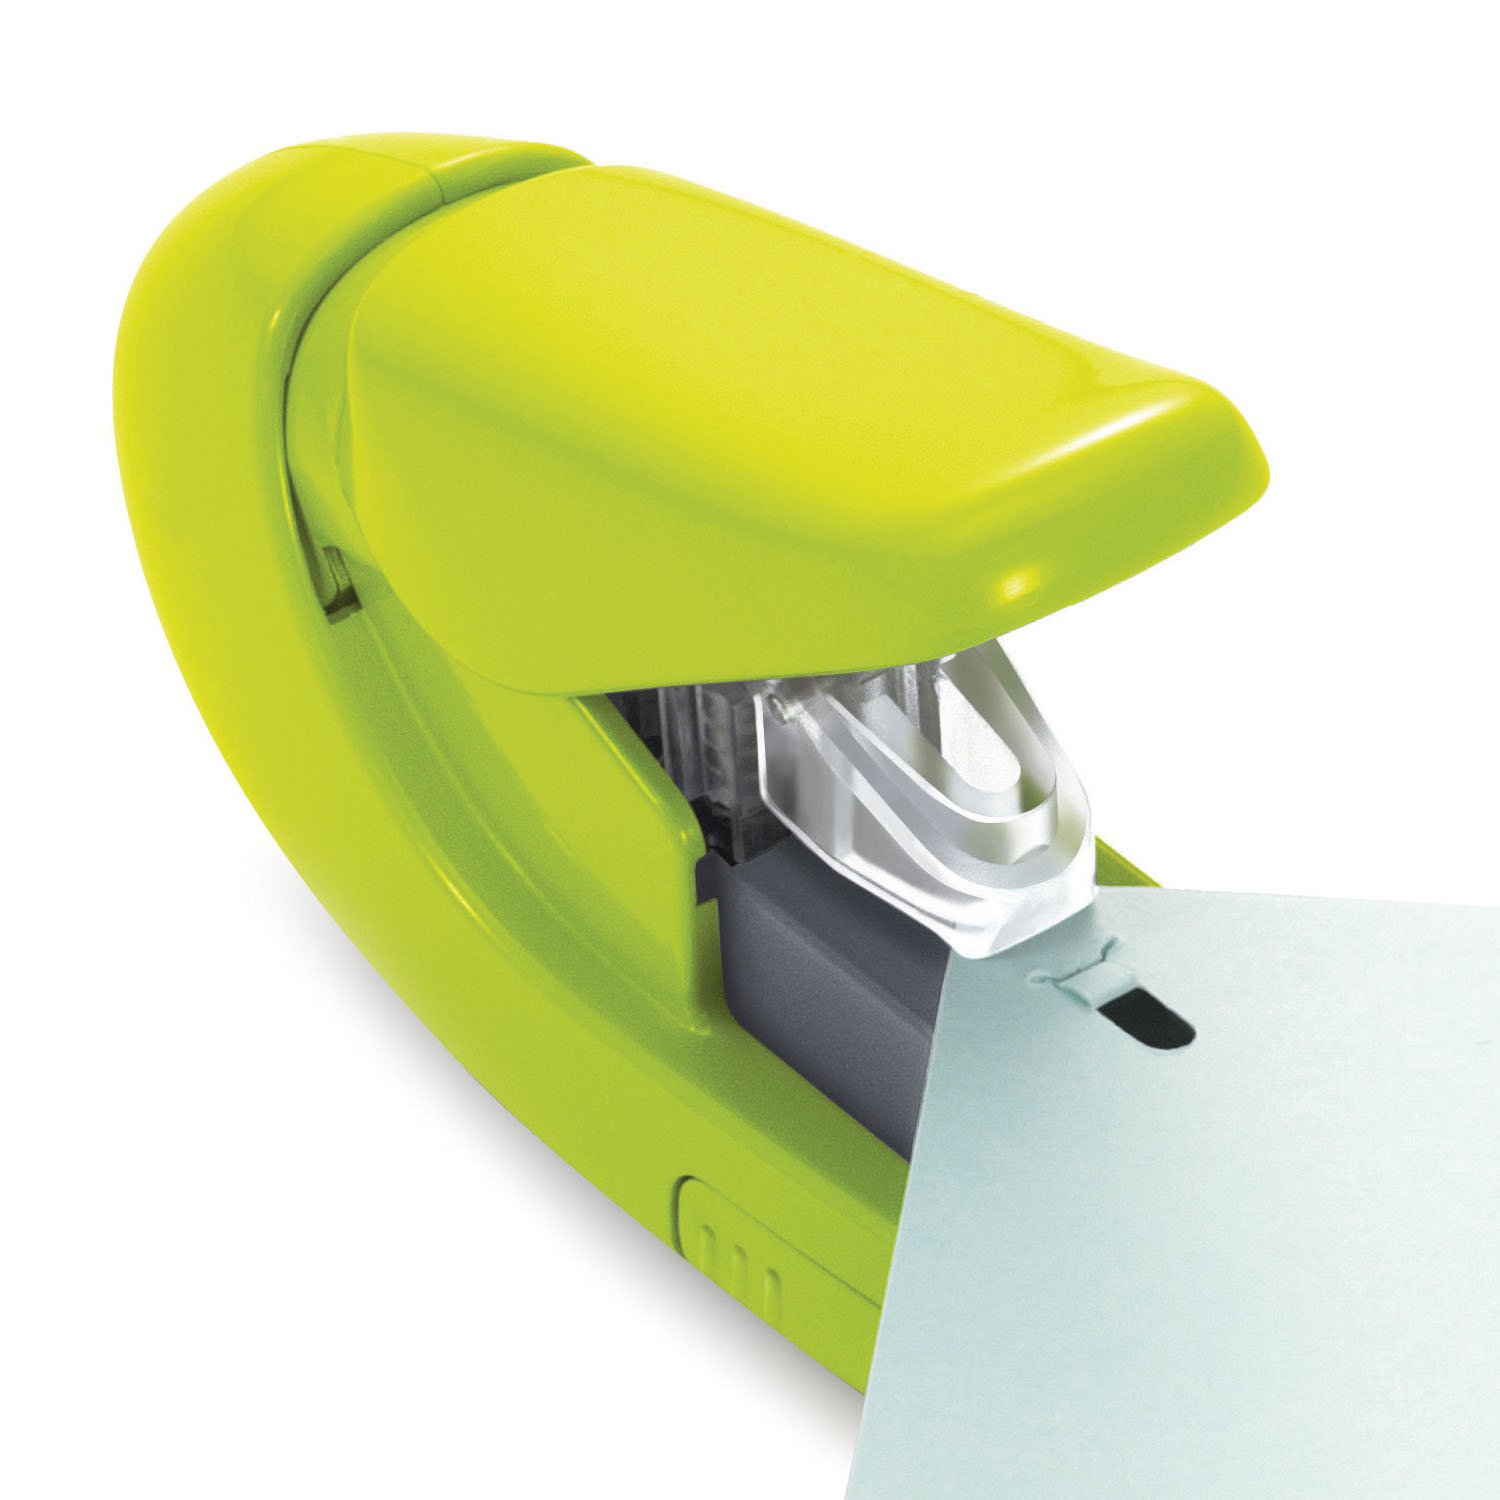 Plus PAPER CLINCH Compact Green Heavy Duty, Light, Staple Free Stapler (31251)